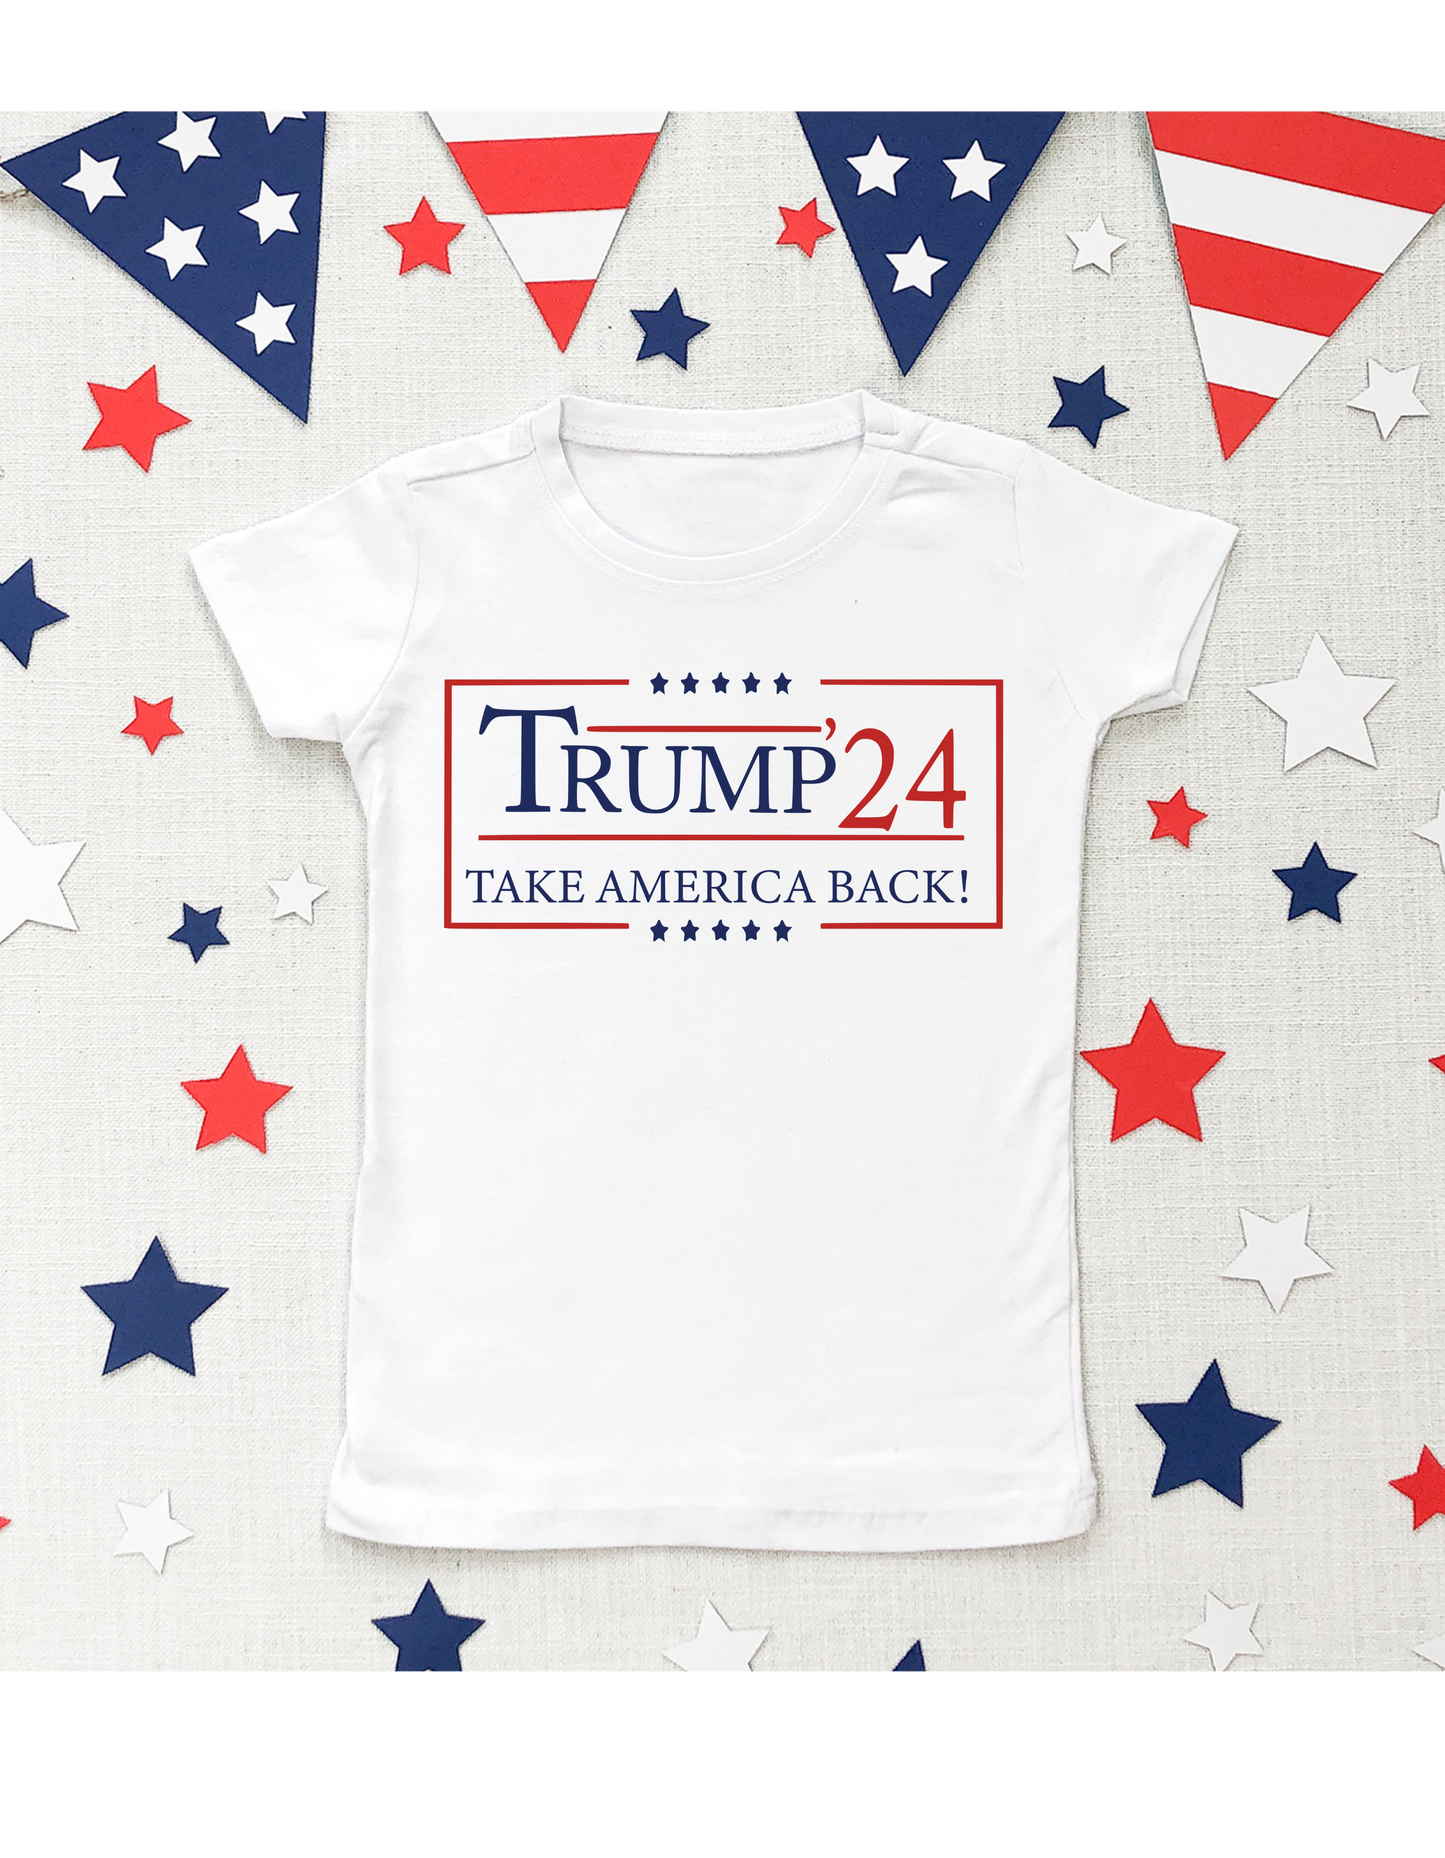 Trump 24 Graphic T-Shirt